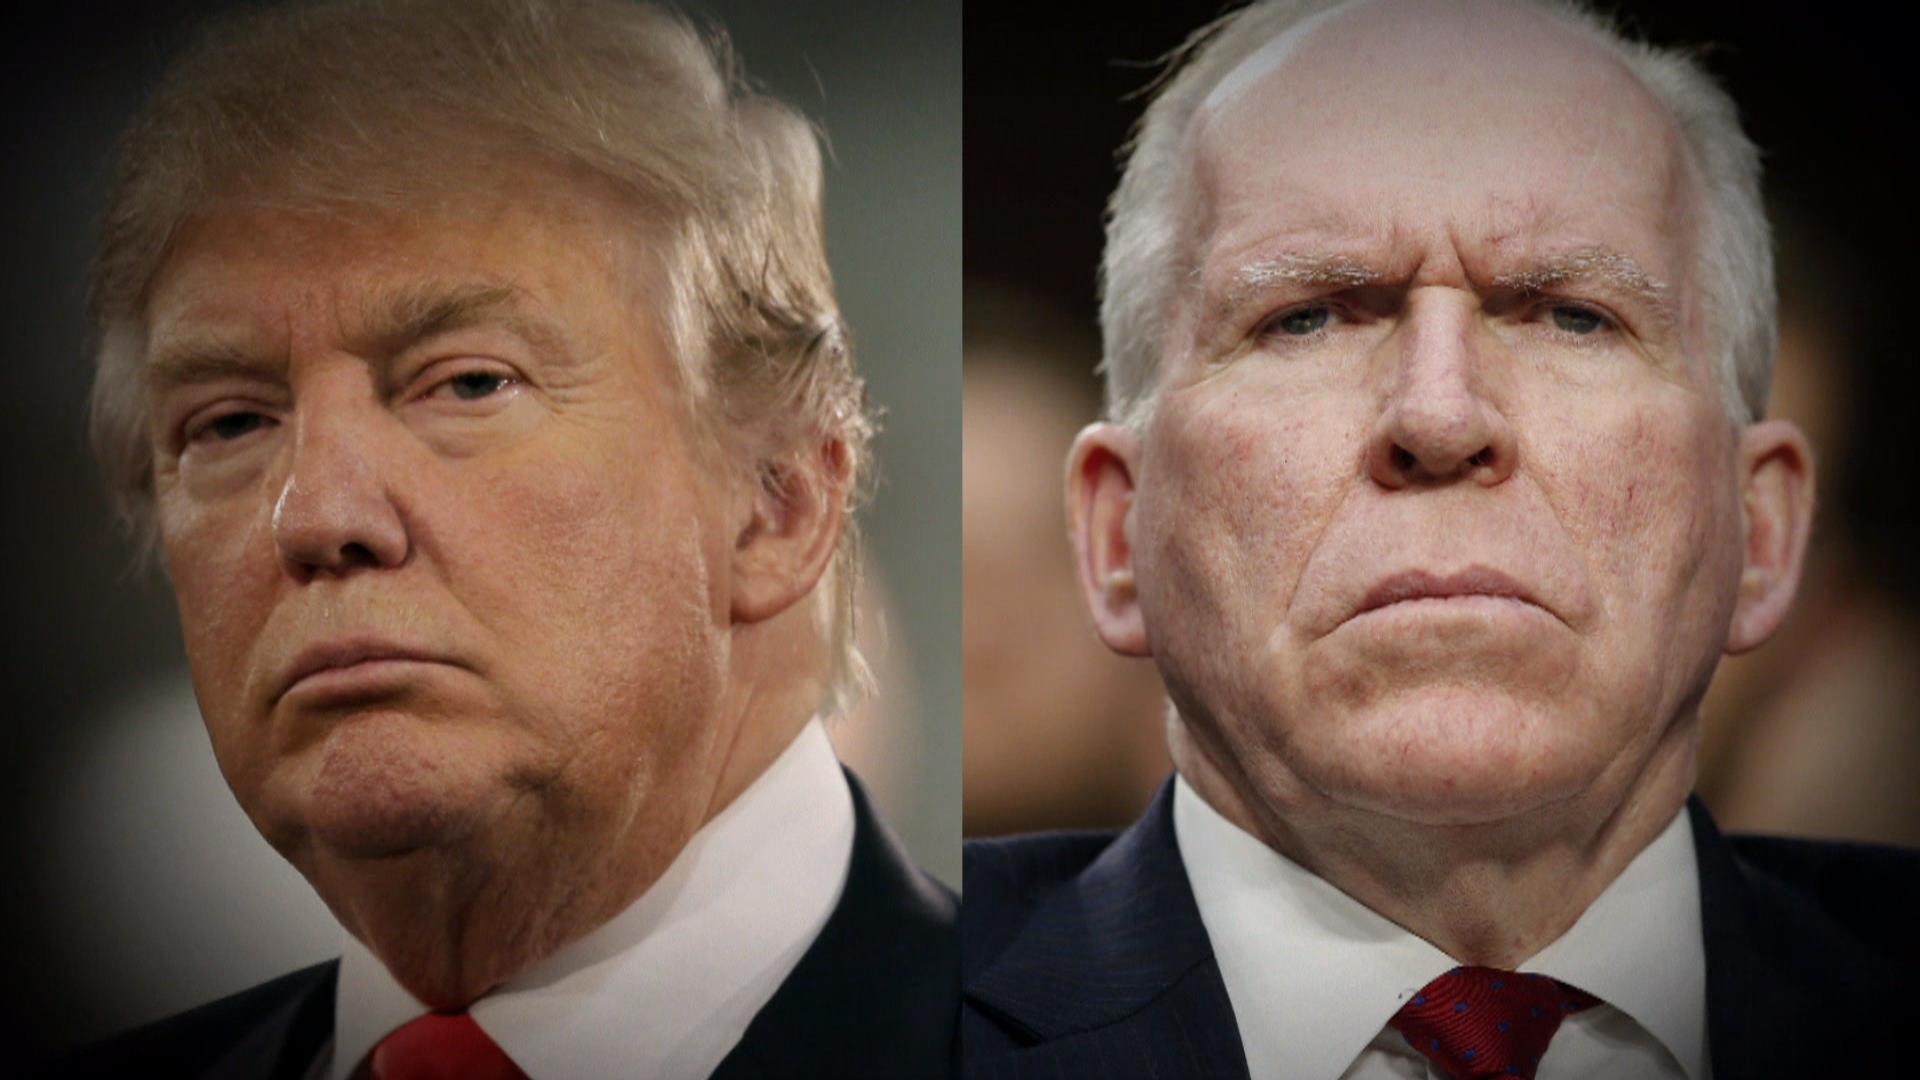 CIA director John Brennan slams Trump for recent intelligence accusations